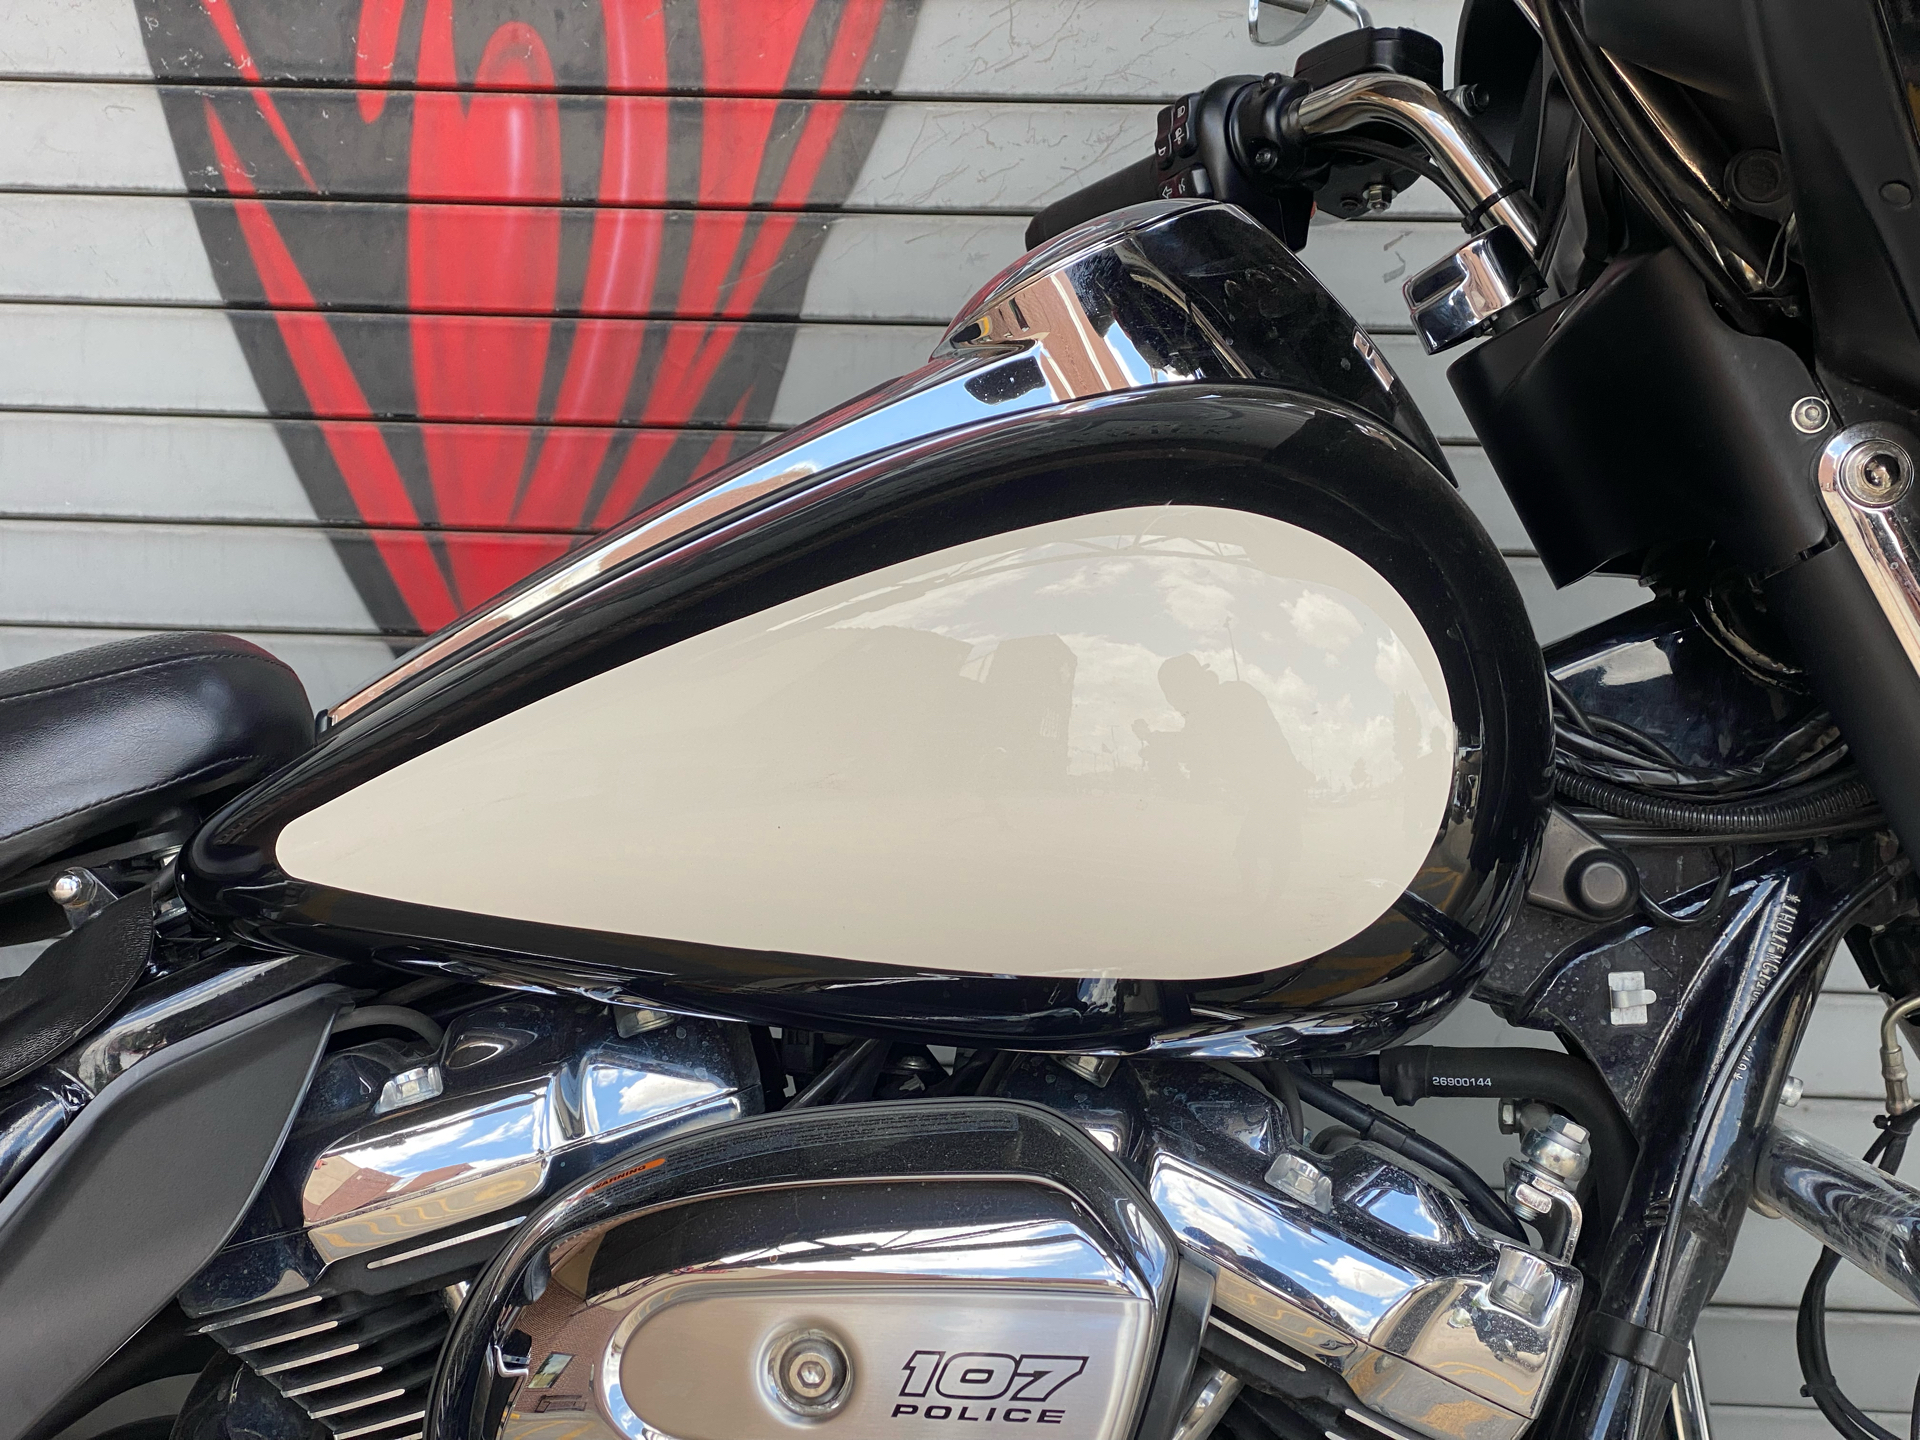 2018 Harley-Davidson Police Electra Glide Standard in Carrollton, Texas - Photo 5